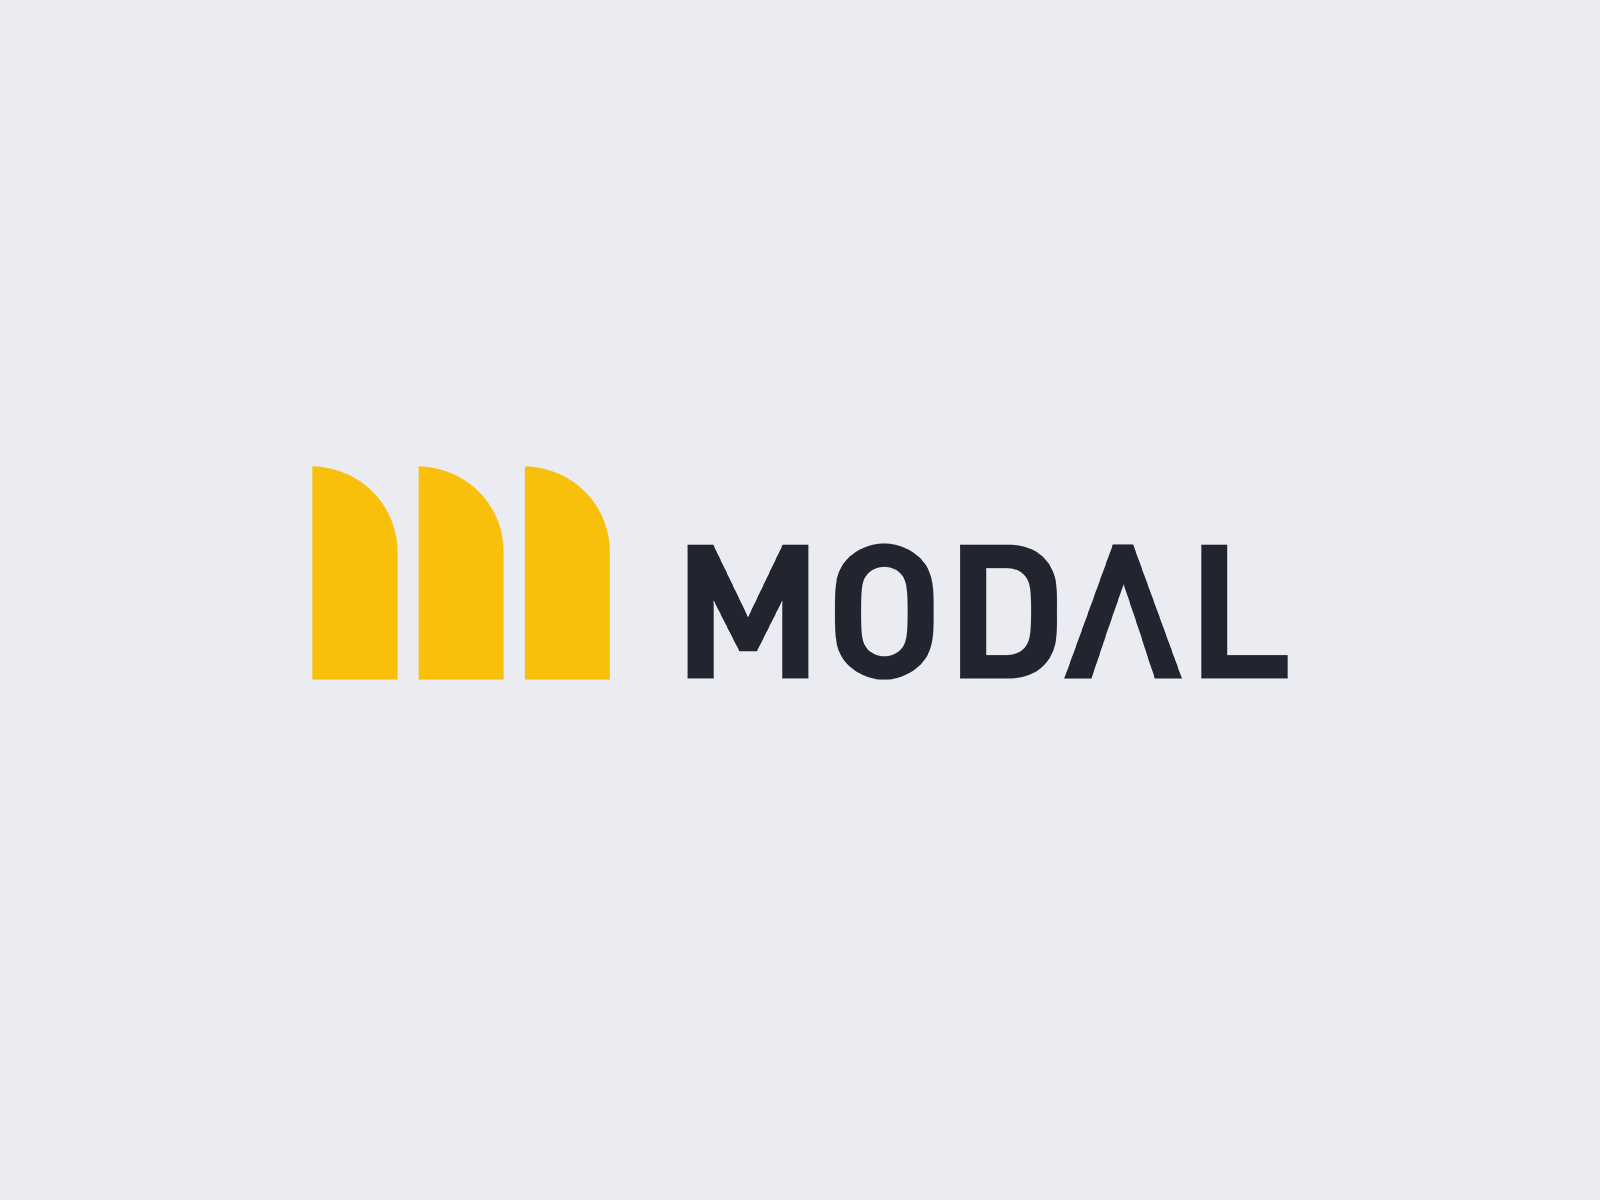 Modal Booking Logo Animation animated animation arrow logo logo design